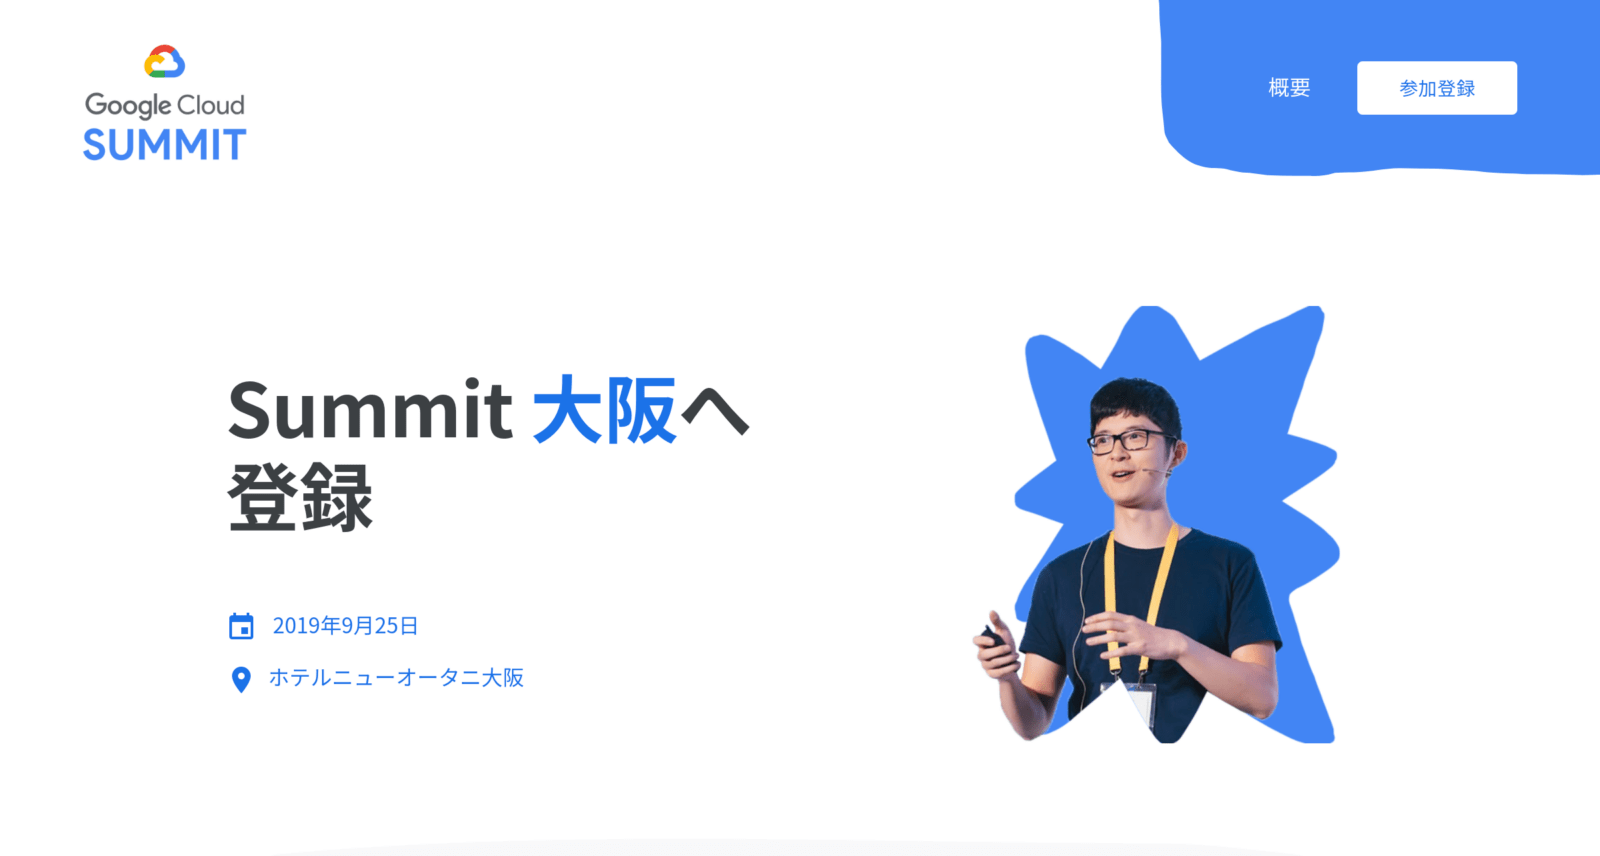 Google Cloud Summit ’19 in 大阪へ 登録